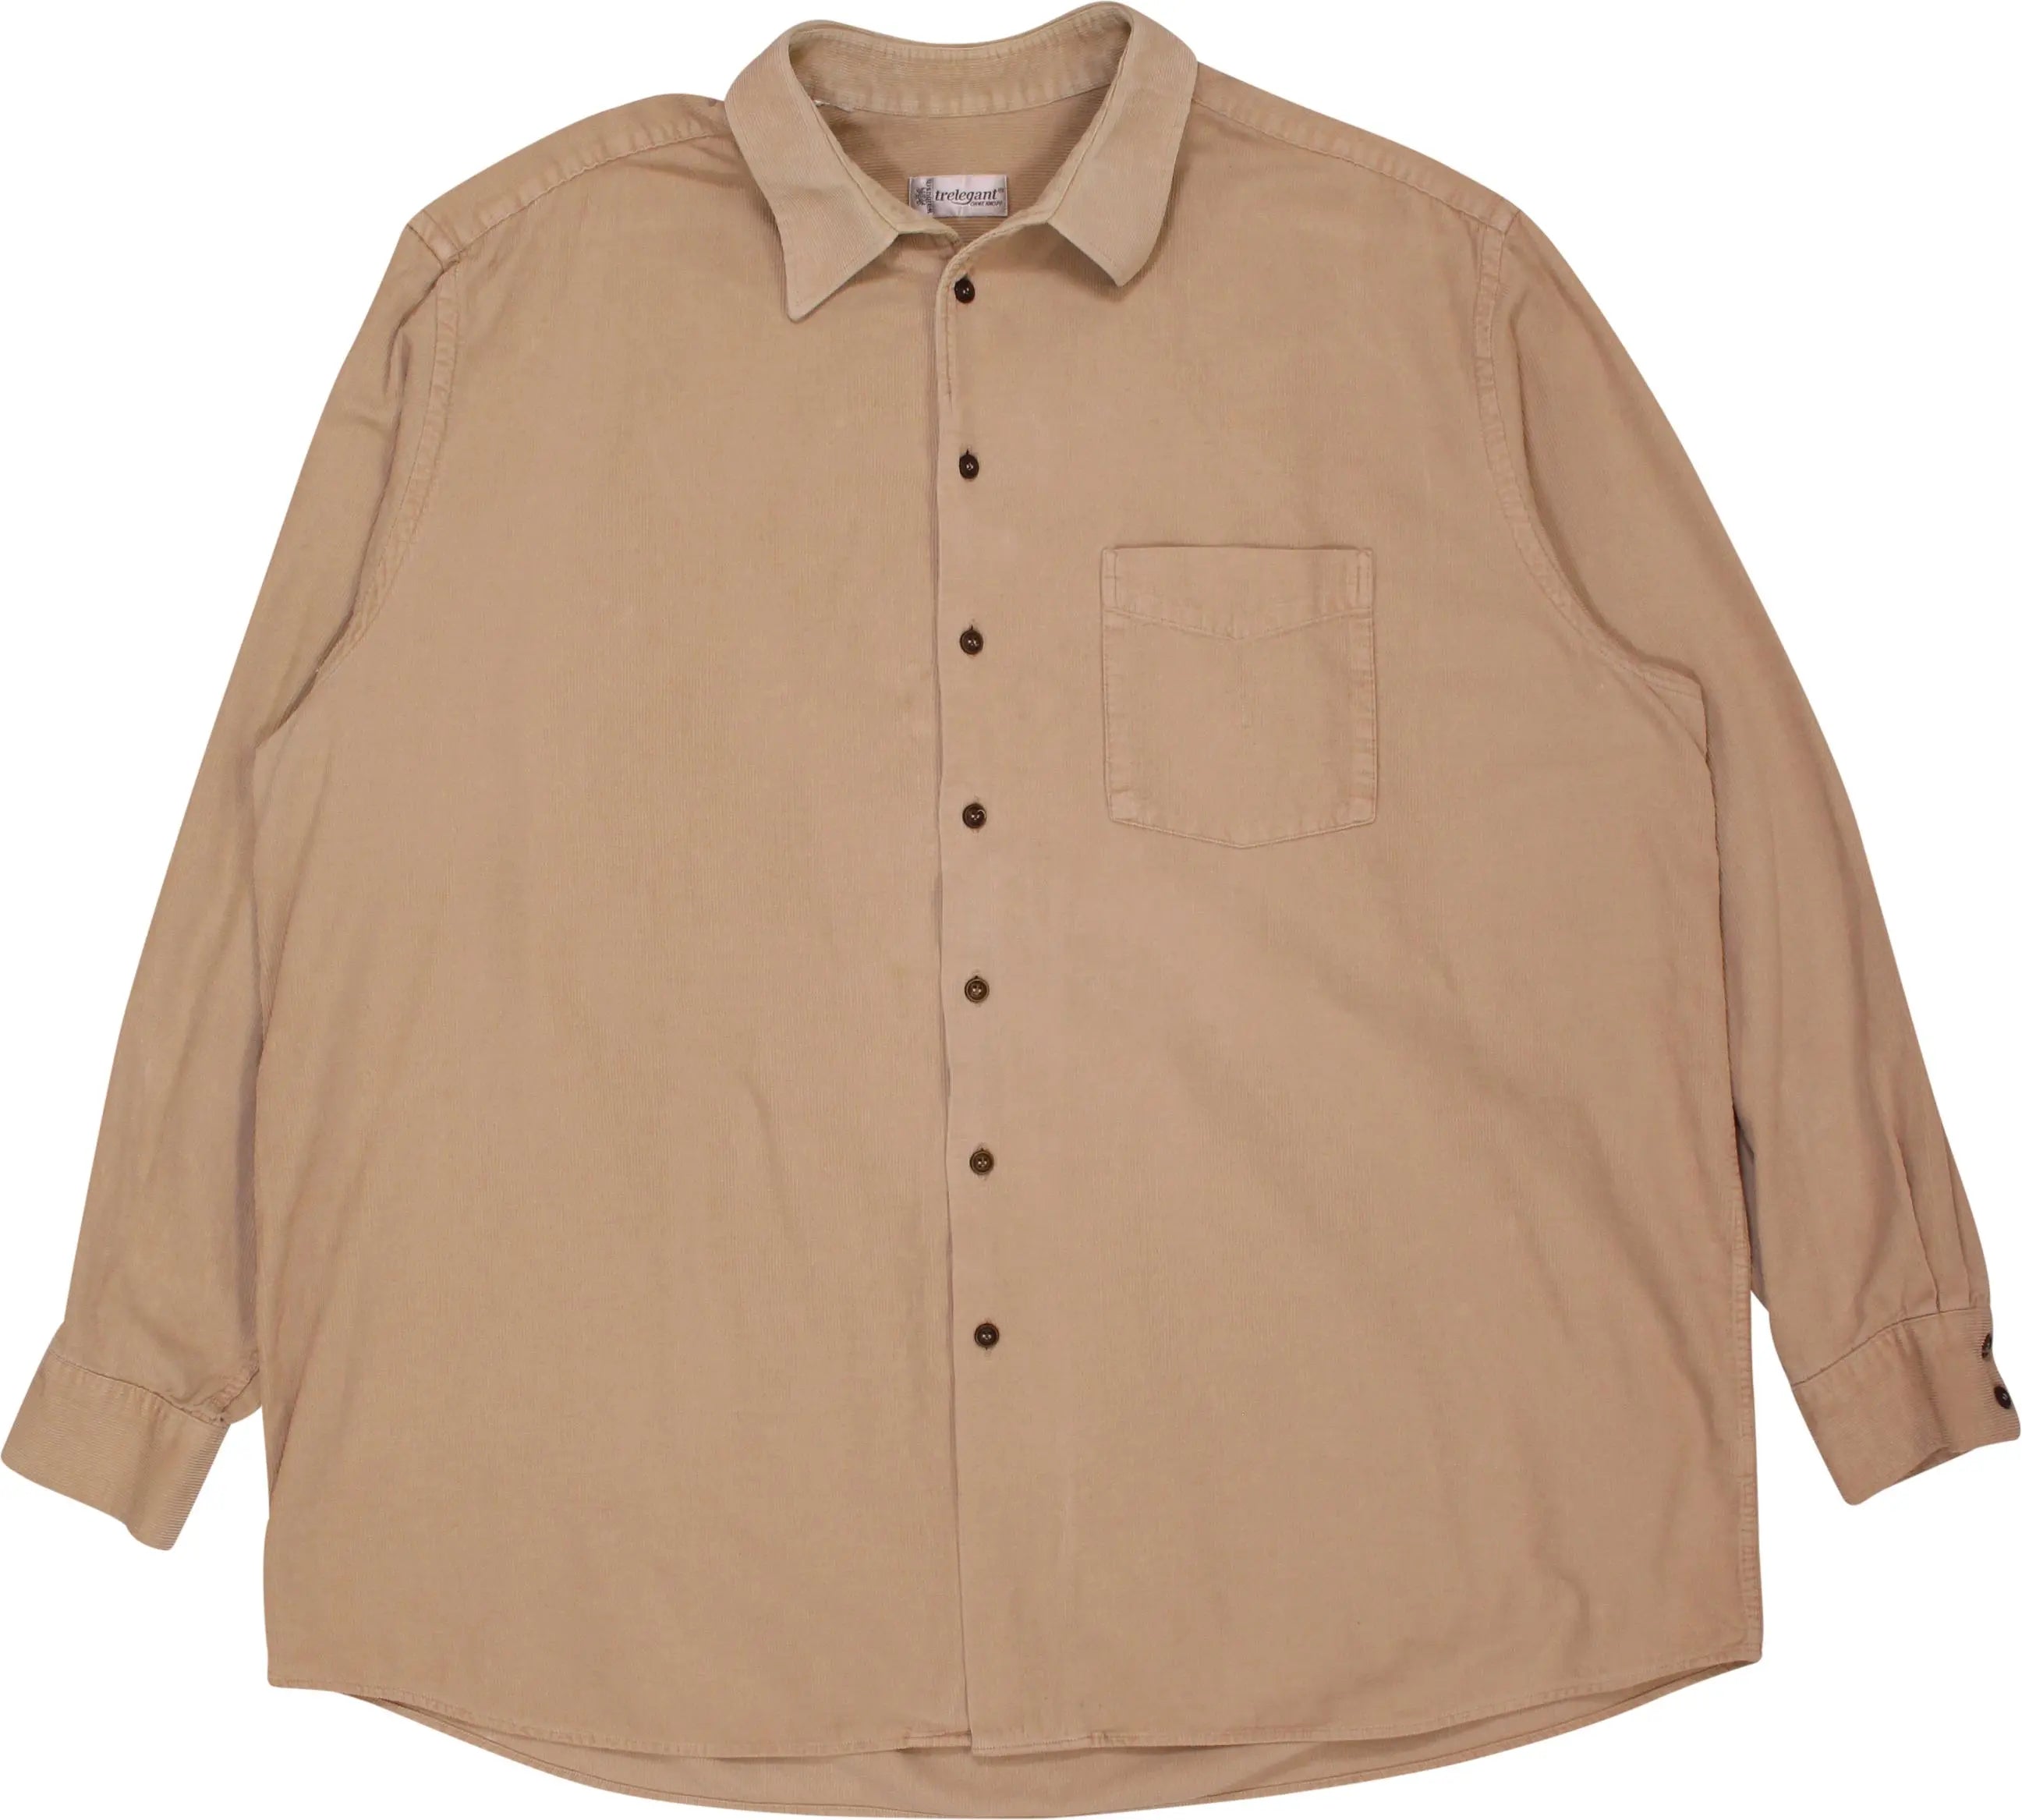 Walbusch Trelegant - Beige Corduroy Shirt- ThriftTale.com - Vintage and second handclothing